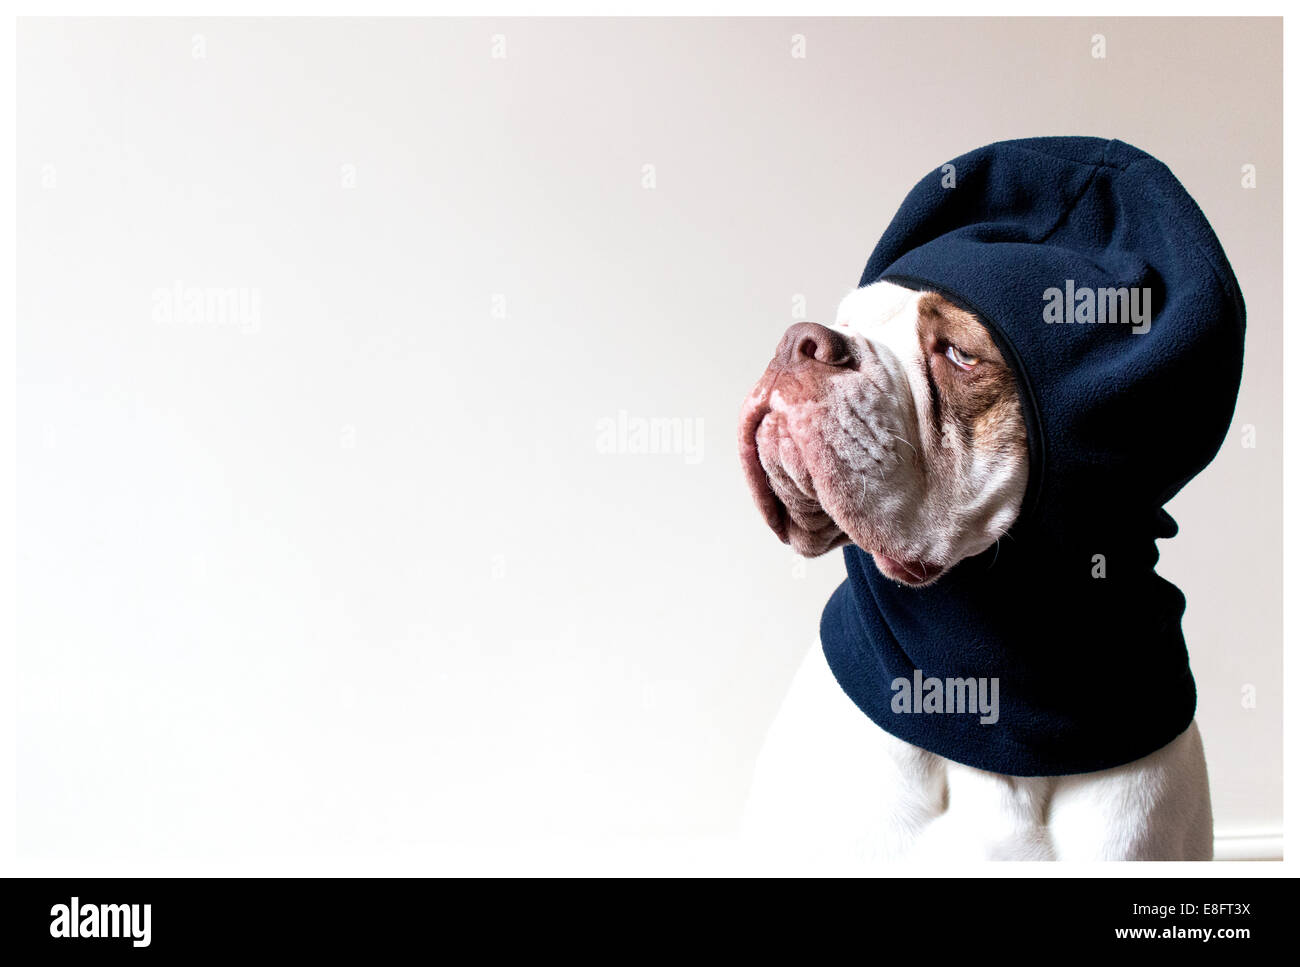 Old Tyme Aylestone bulldog wearing a balaclava hat Stock Photo